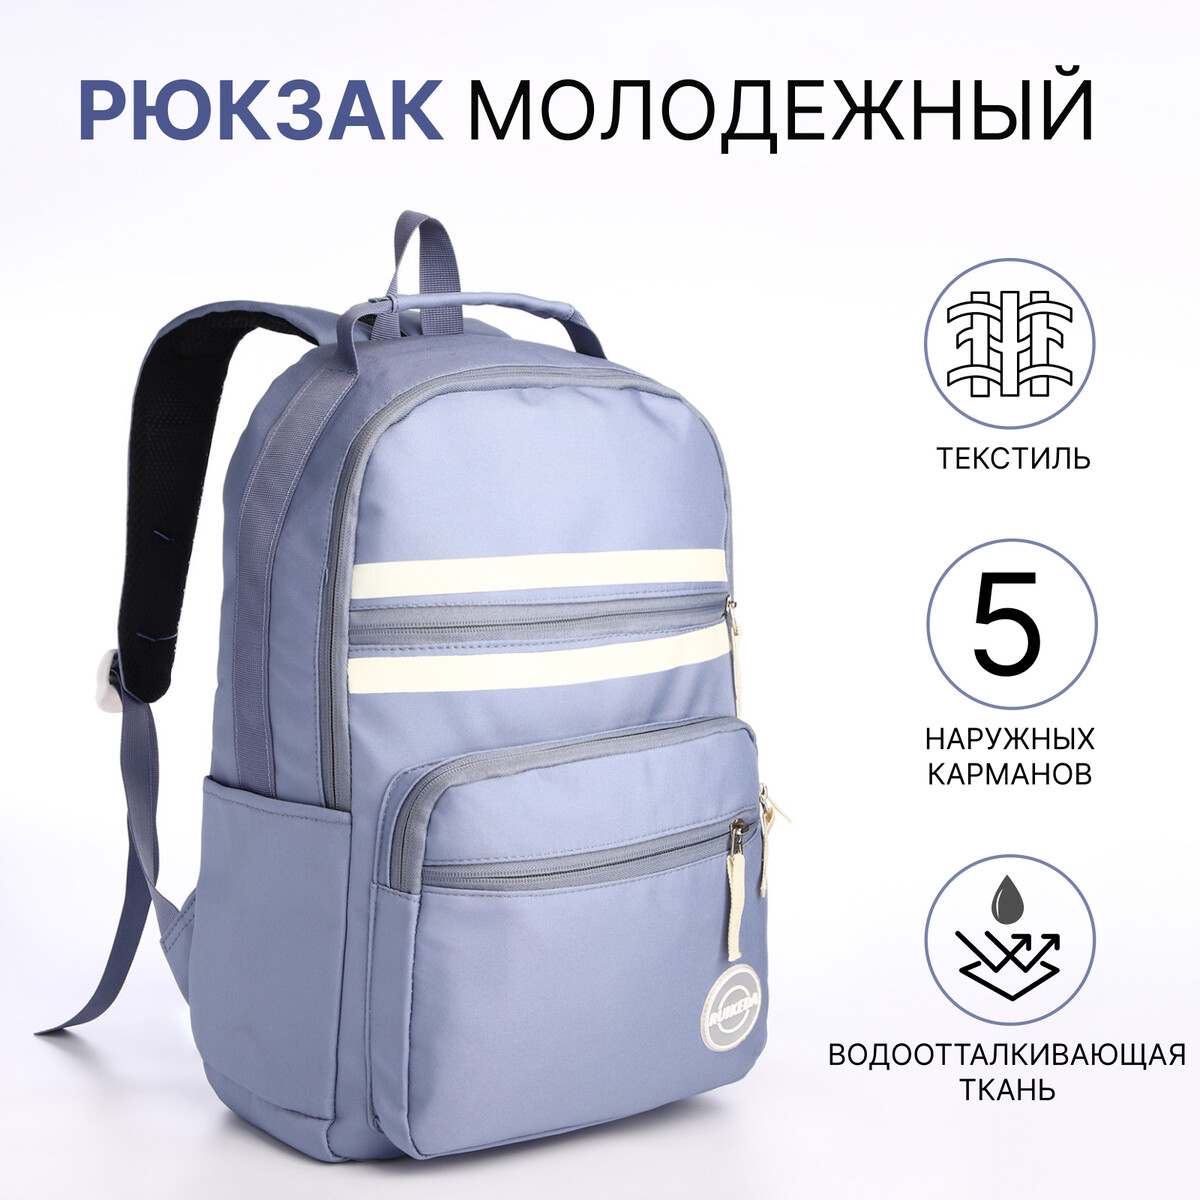 Рюкзак молодежный из текстиля на молнии, 5 карманов, цвет синий рюкзак bruno visconti молодежный синий copyleft арт 12 003 148 02